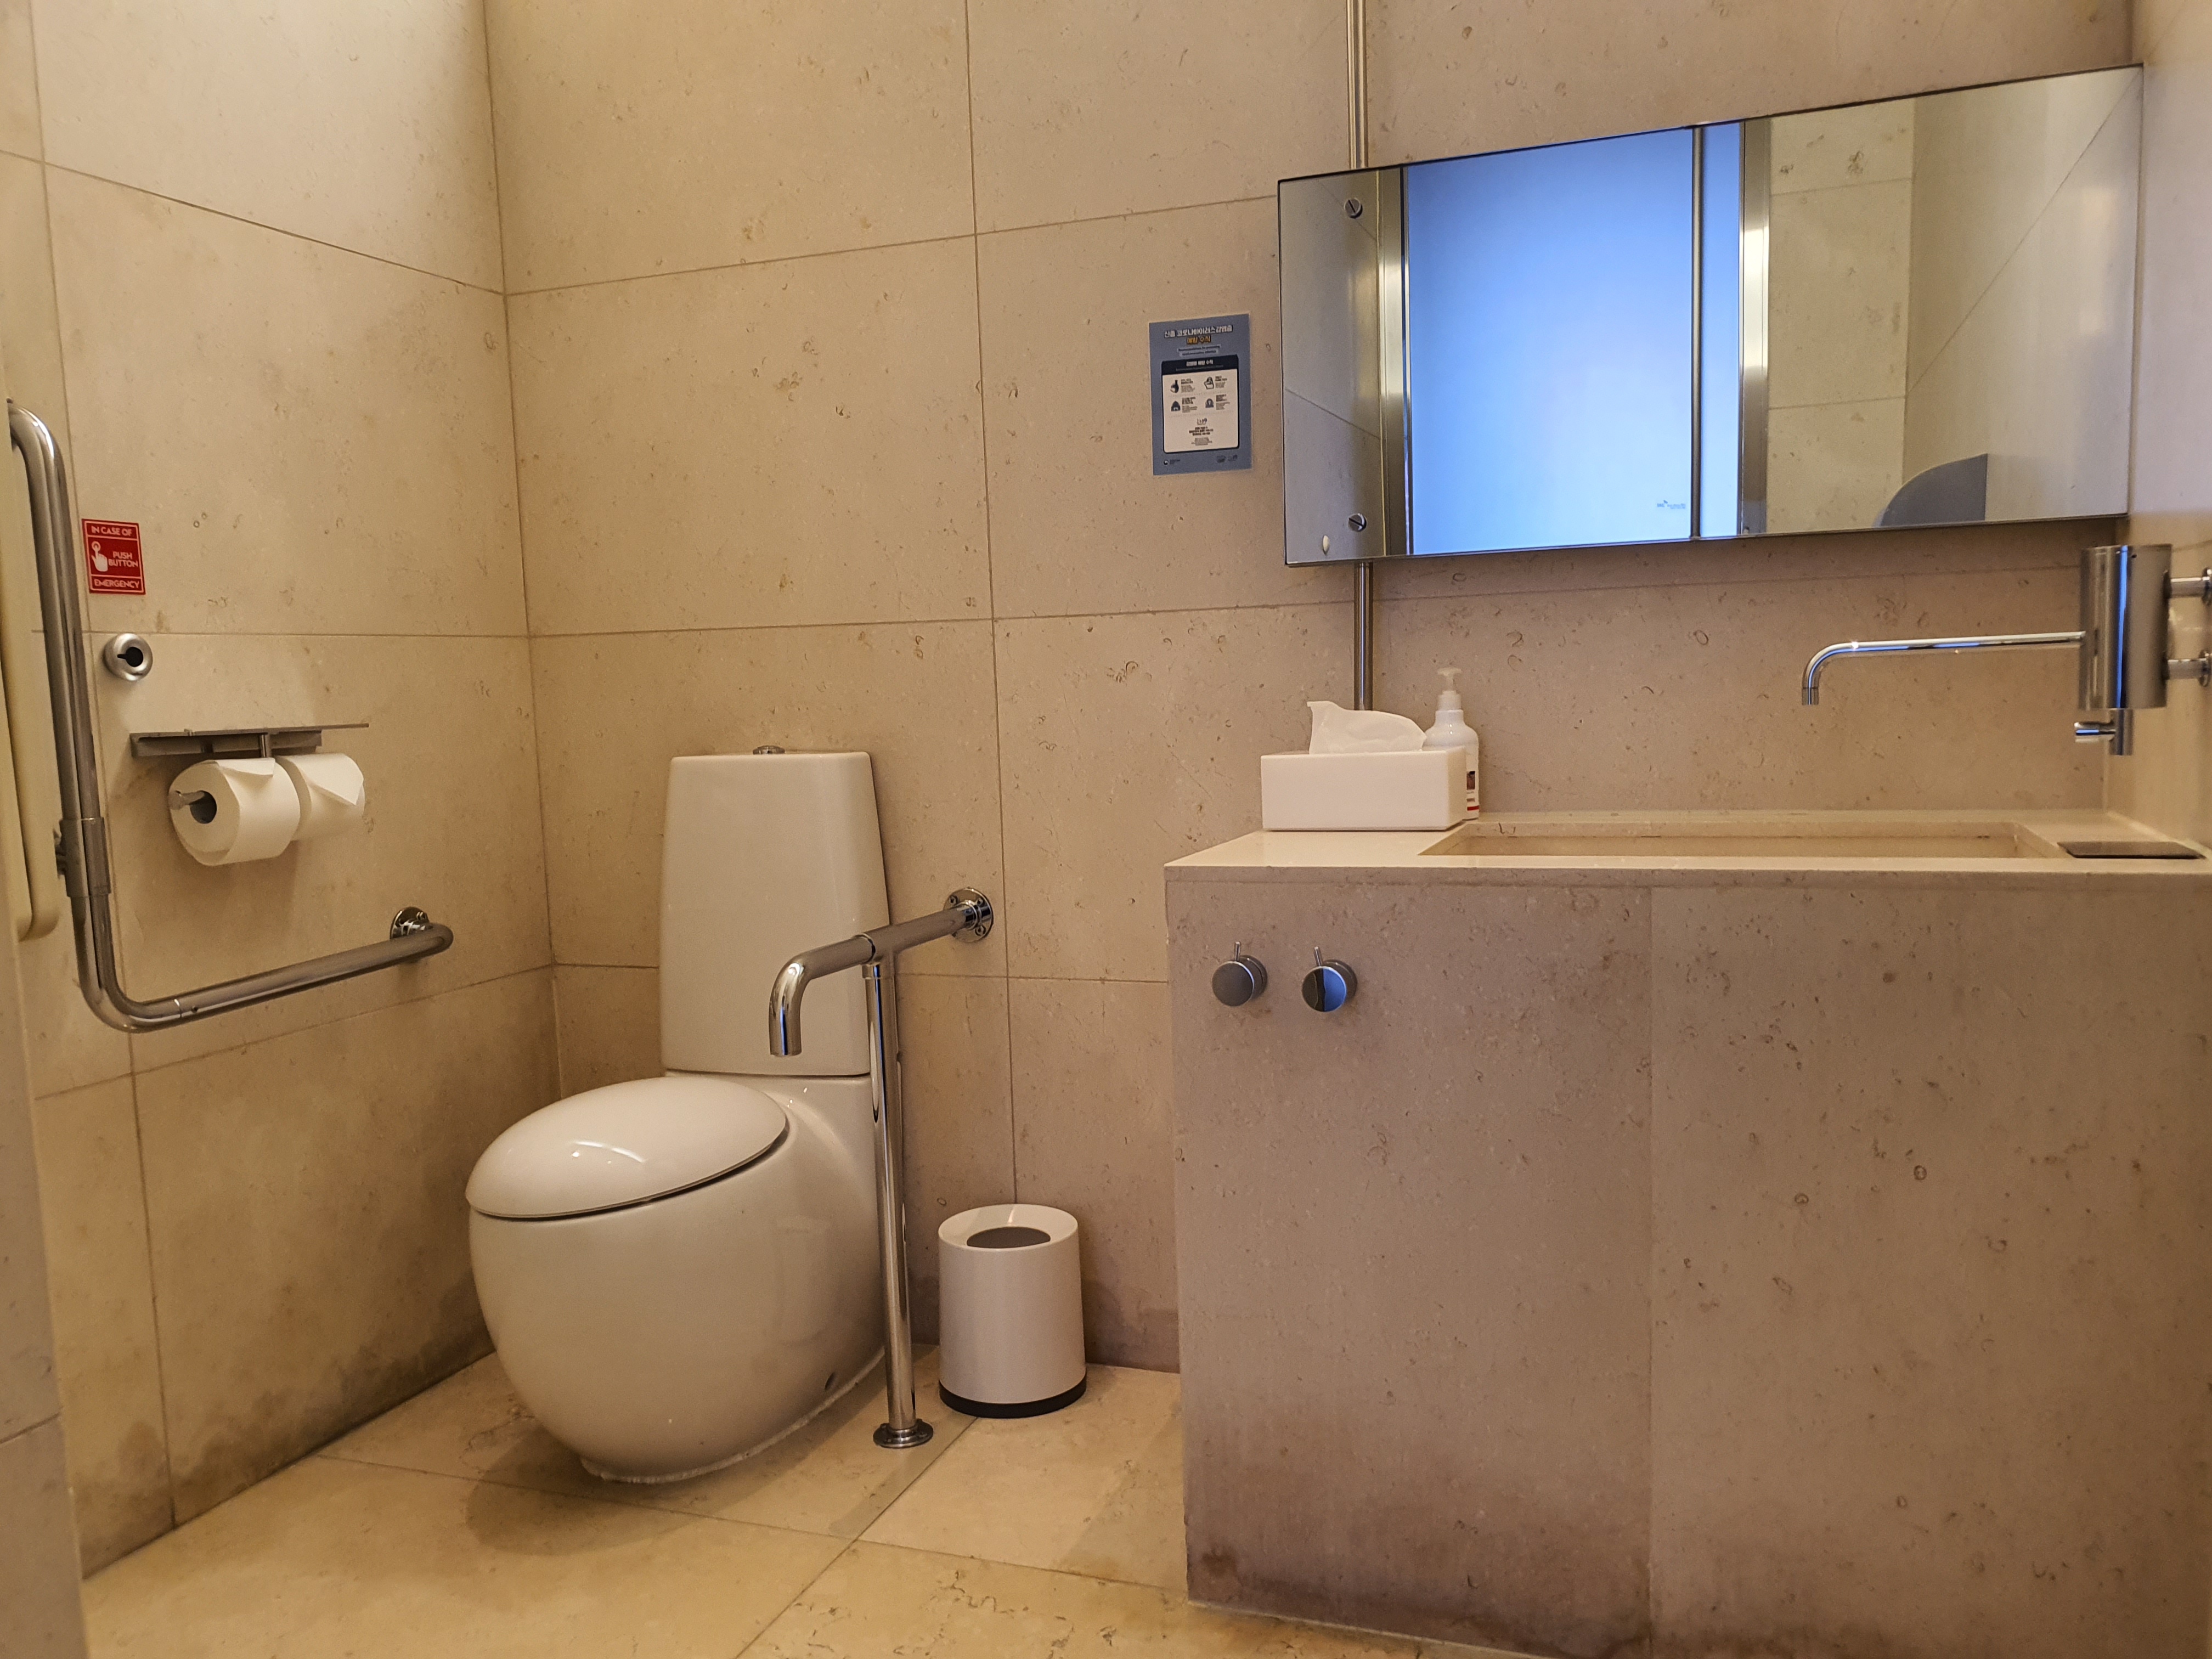 Bathroom0 : Interior view of the accessible guest room bathroom